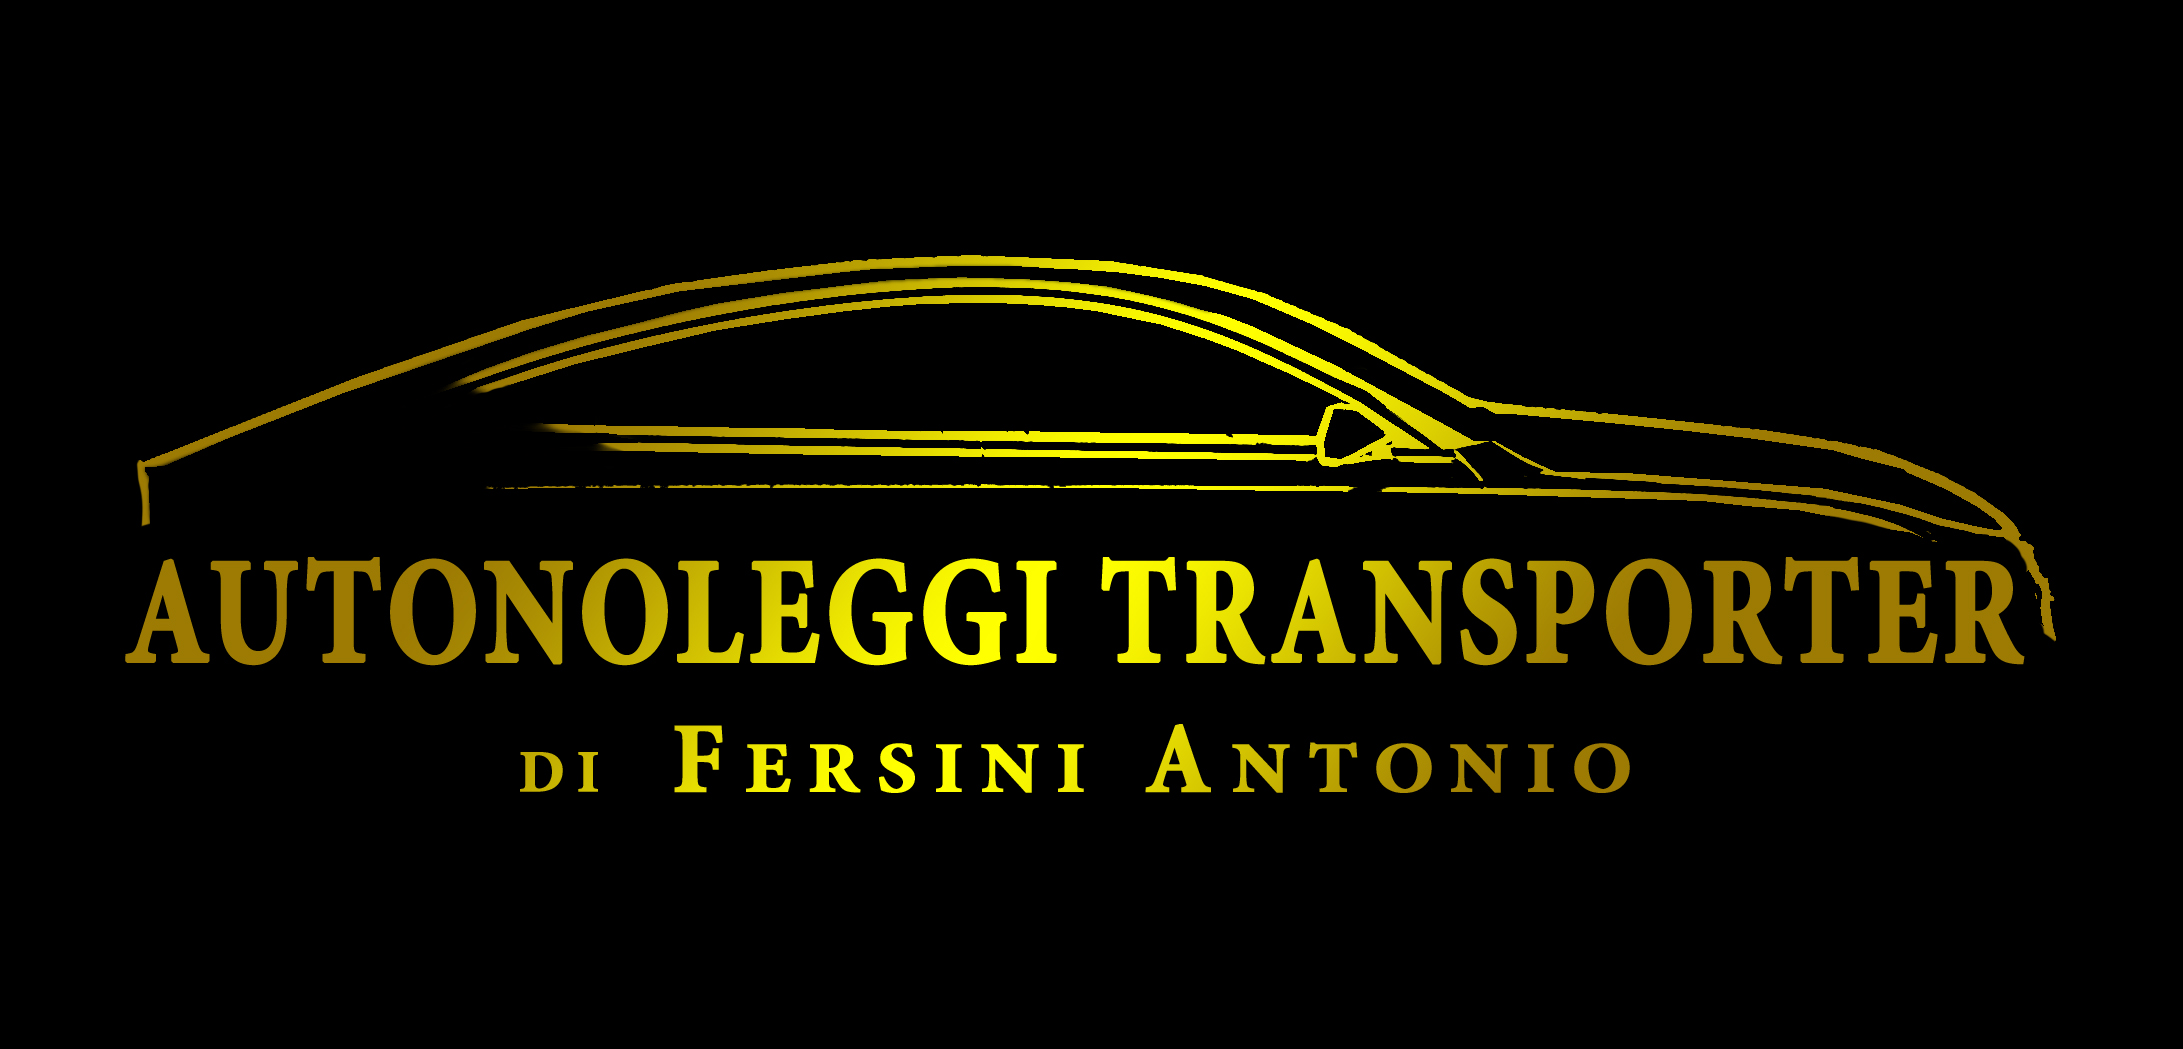 Autonoleggi Transporter Fersini Antonio